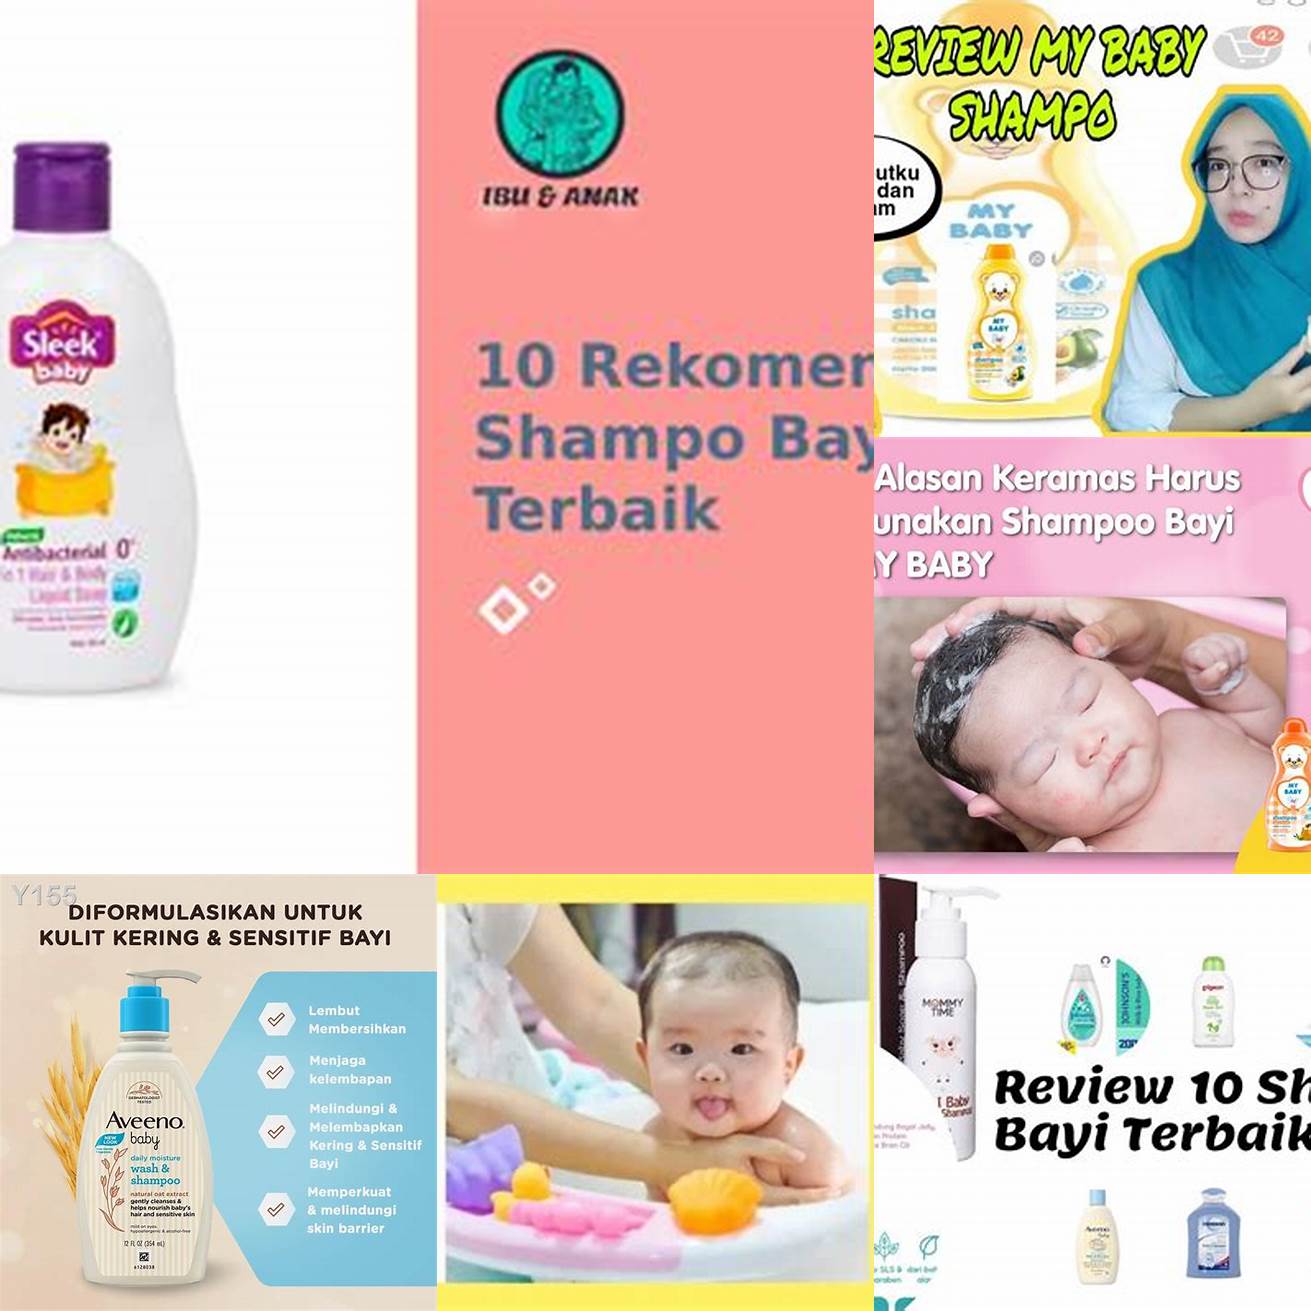 Gunakan shampo bayi yang lembut